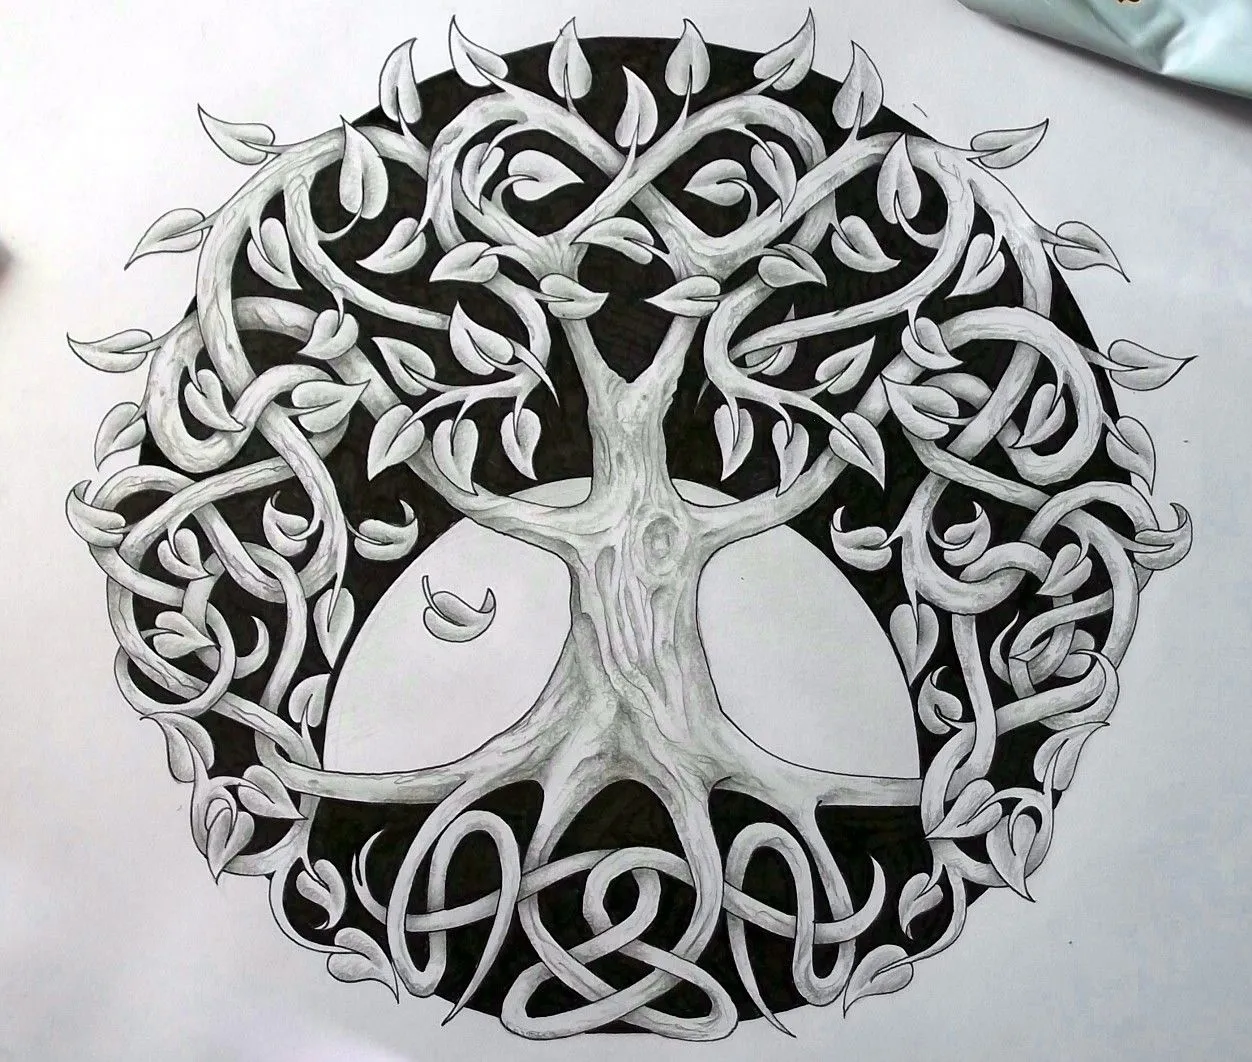 Dibujos del arbol de la vida celta - Imagui